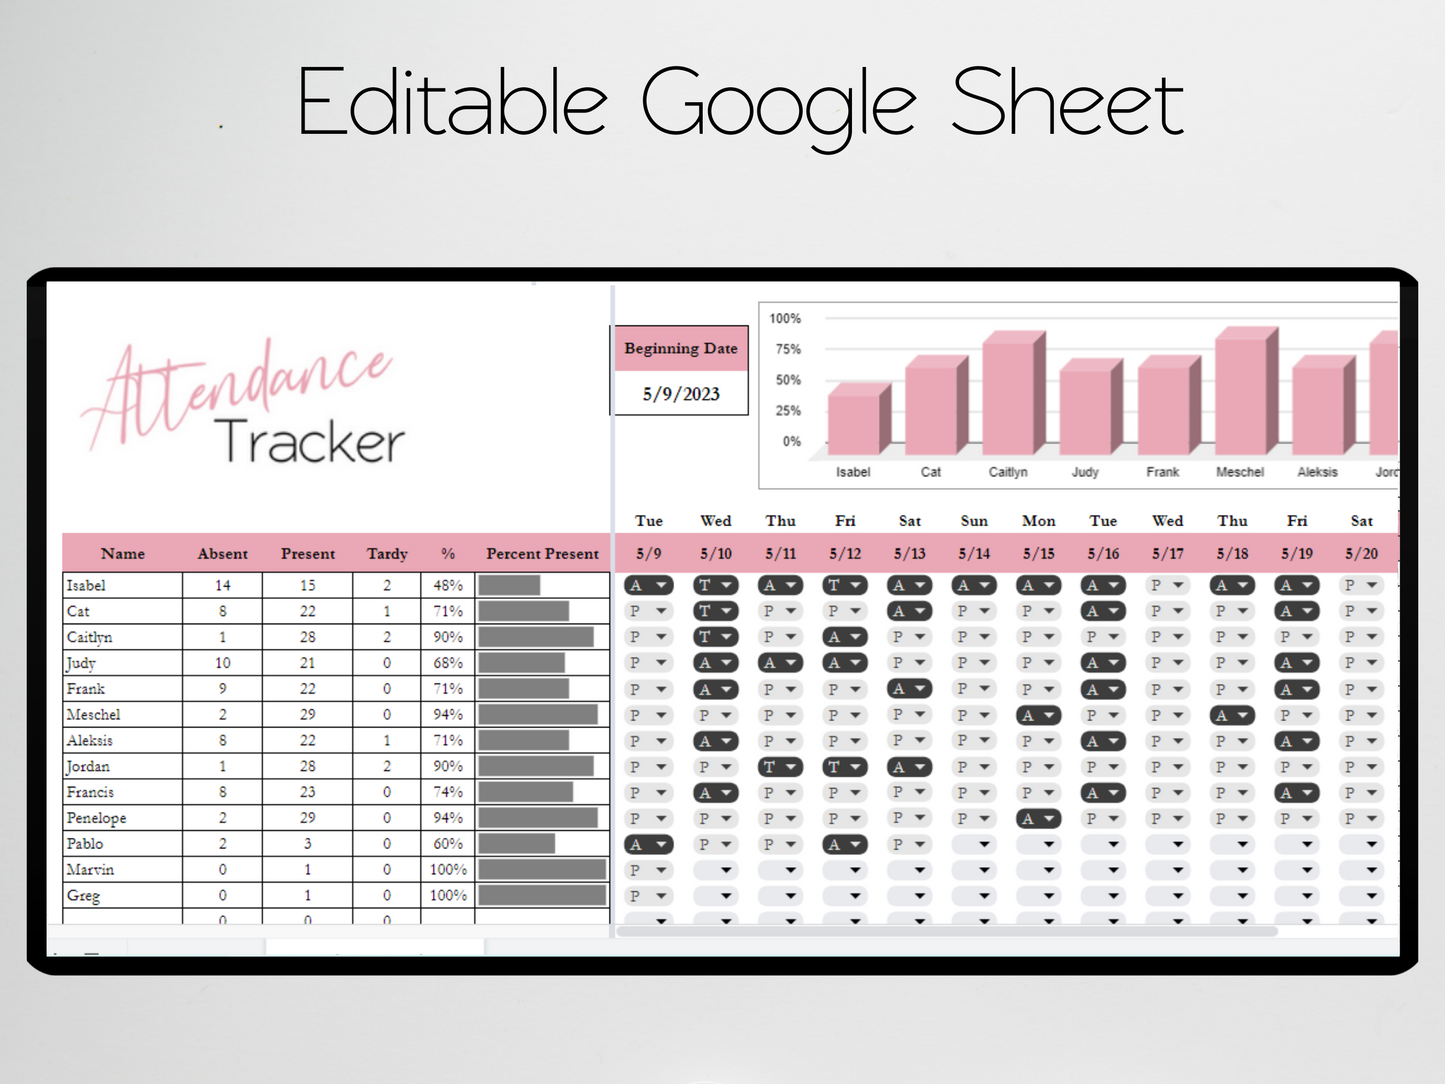 Attendance Tracker Template Google Sheets Excel Spreadsheet